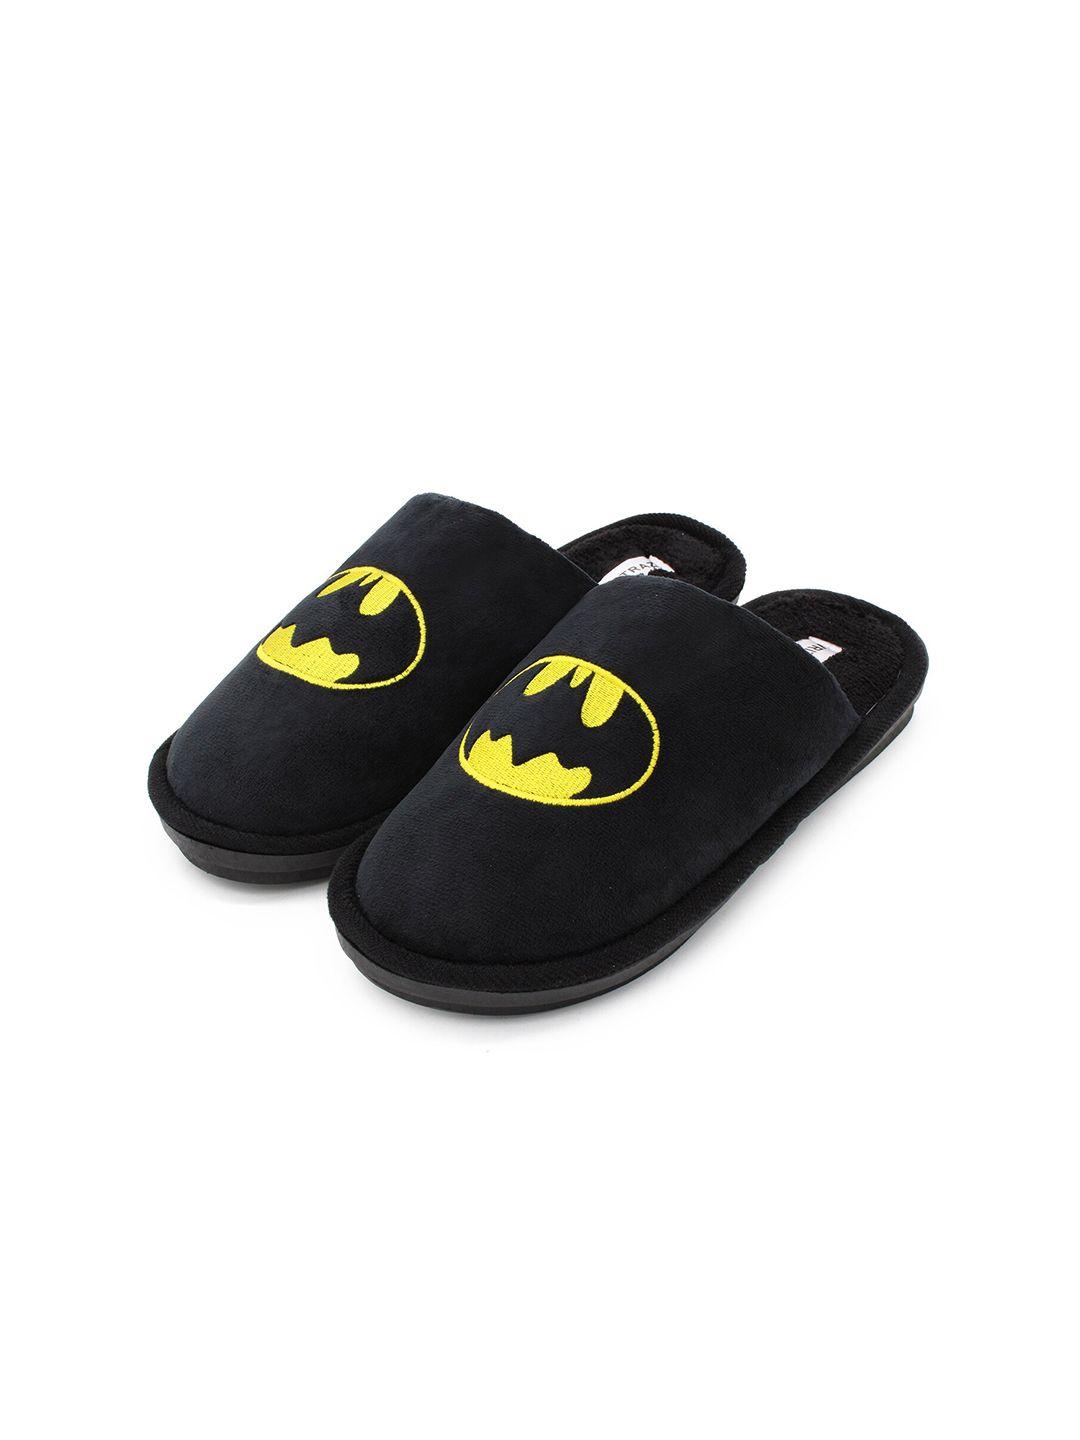 jenna unisex batman printed comfort closed toe fur room slippers